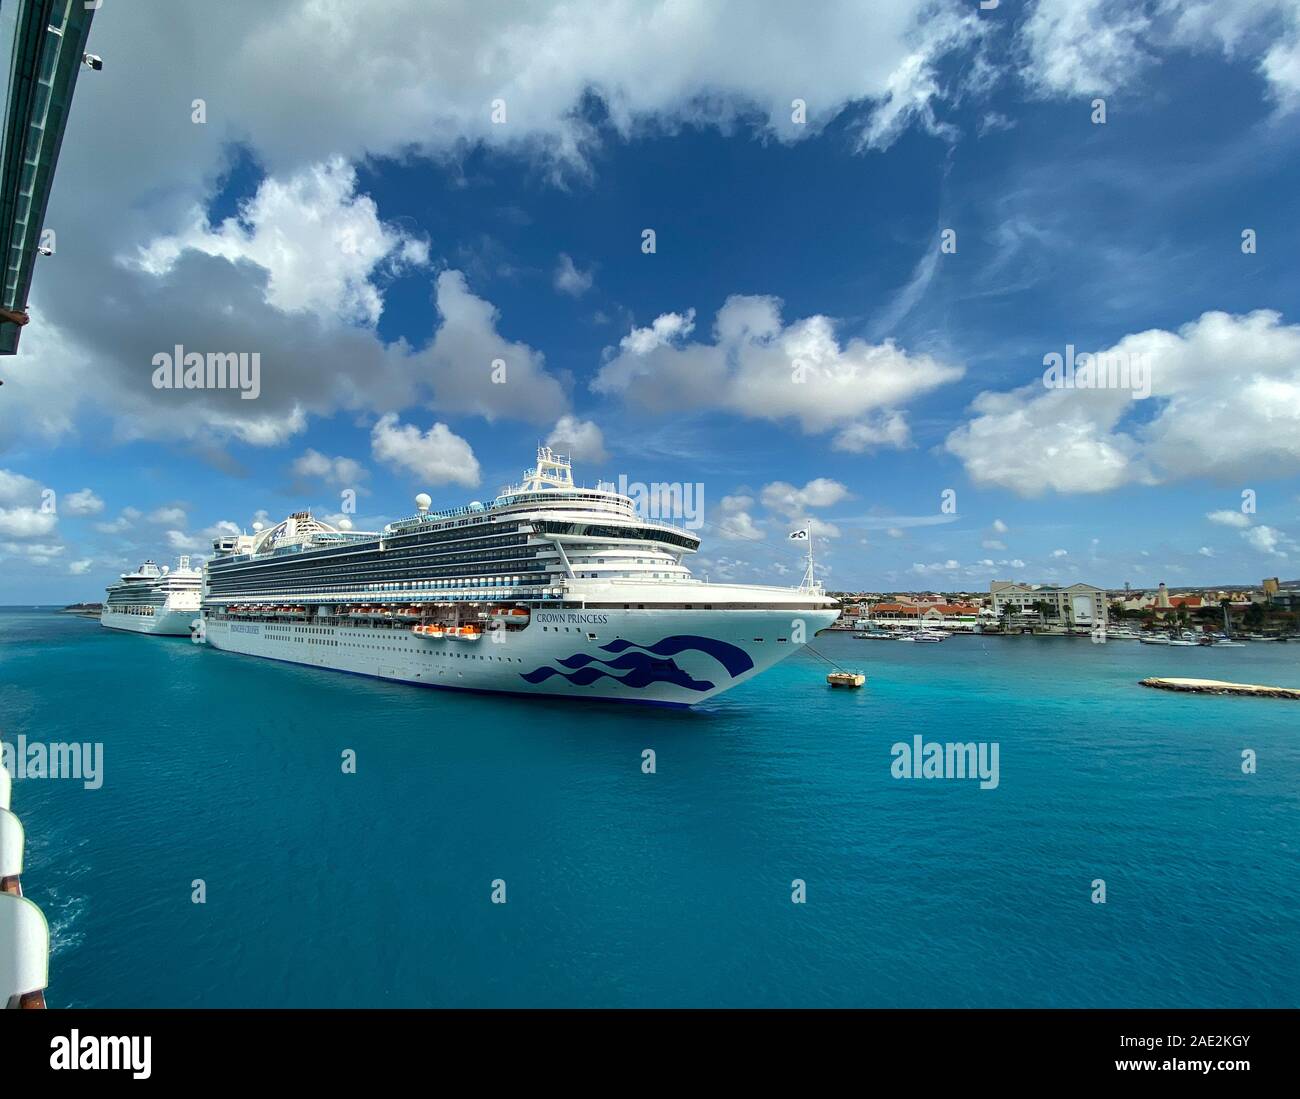 39+ Bahamas cruise ship with casin info